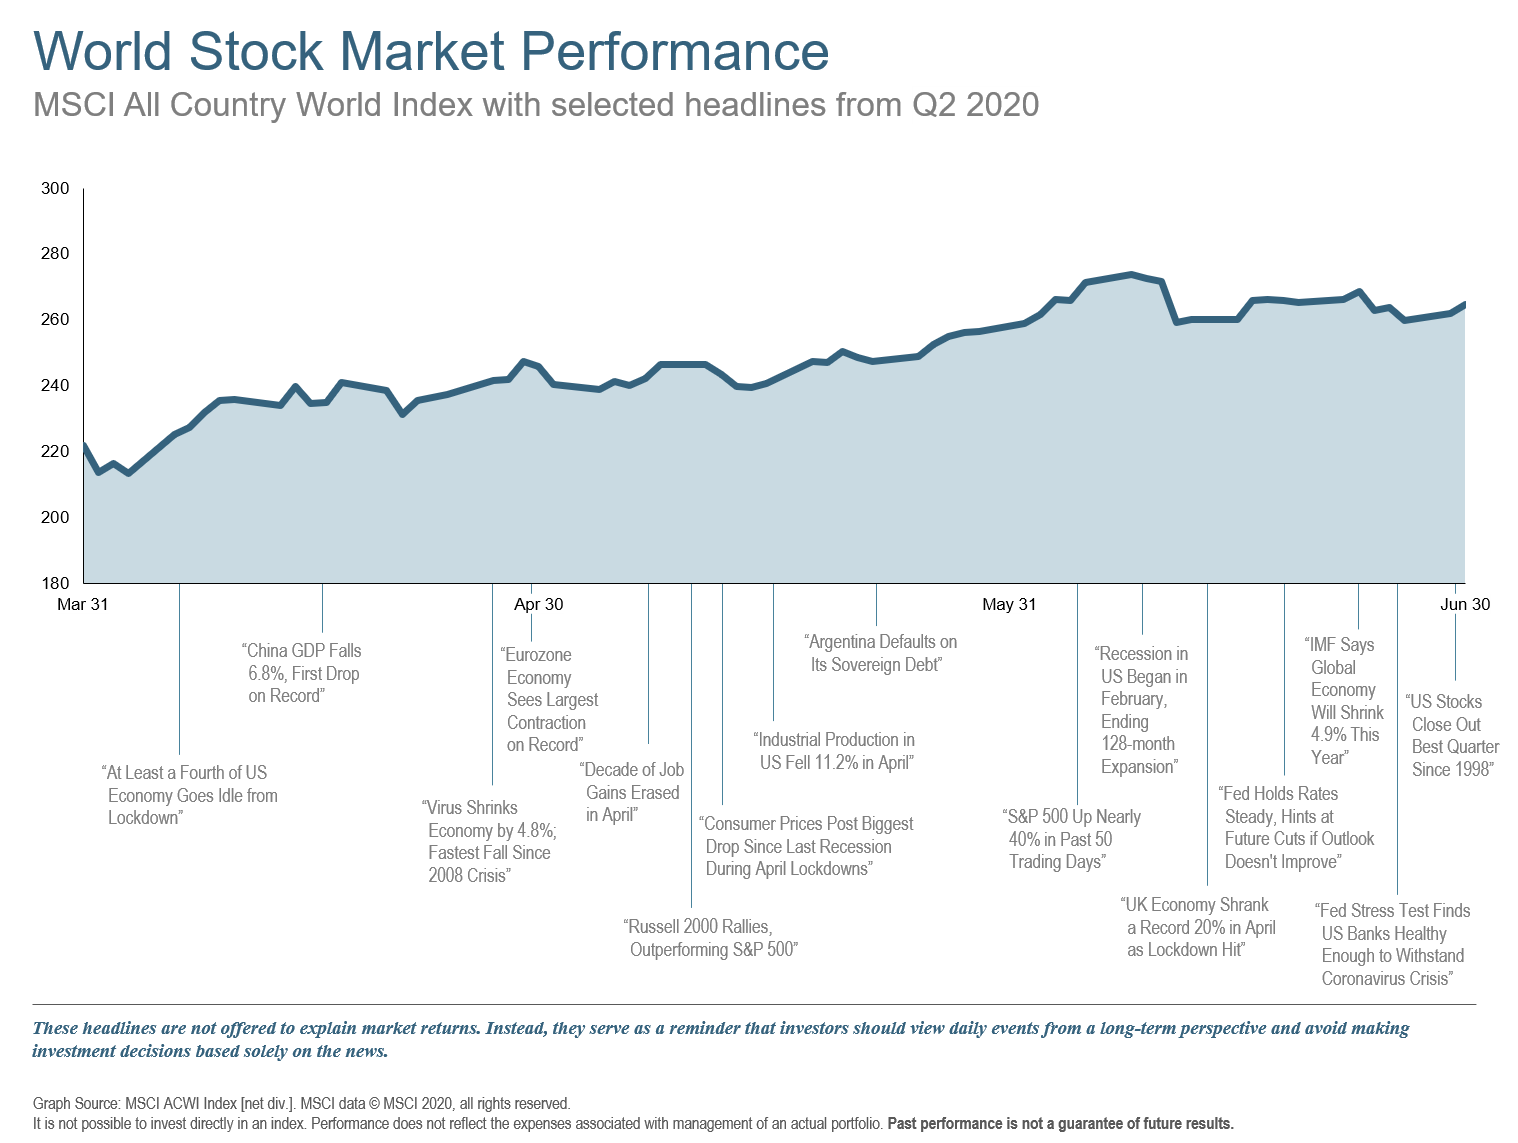 Q2 2020 World Stock Market Performance.png